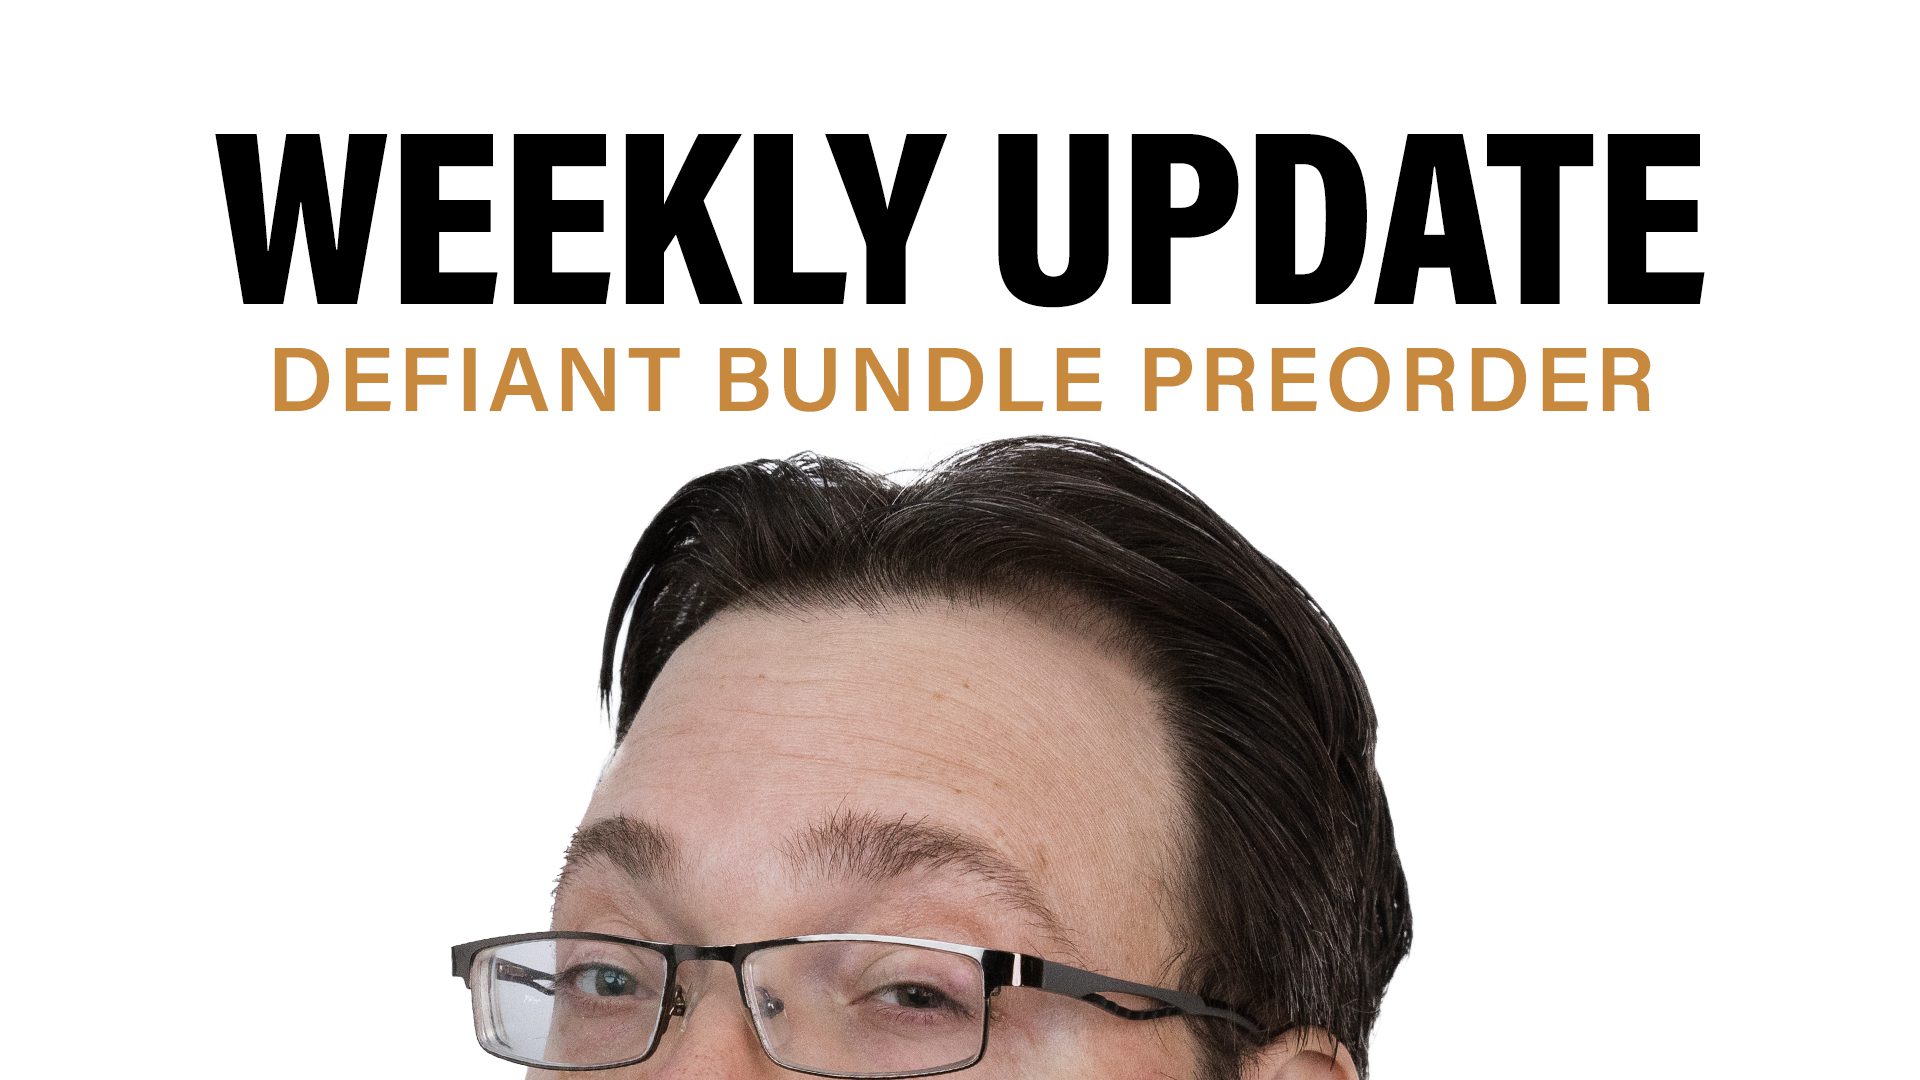 Defiant Bundle Preorder under weekly update title with Brandon's eyes peering above the screen